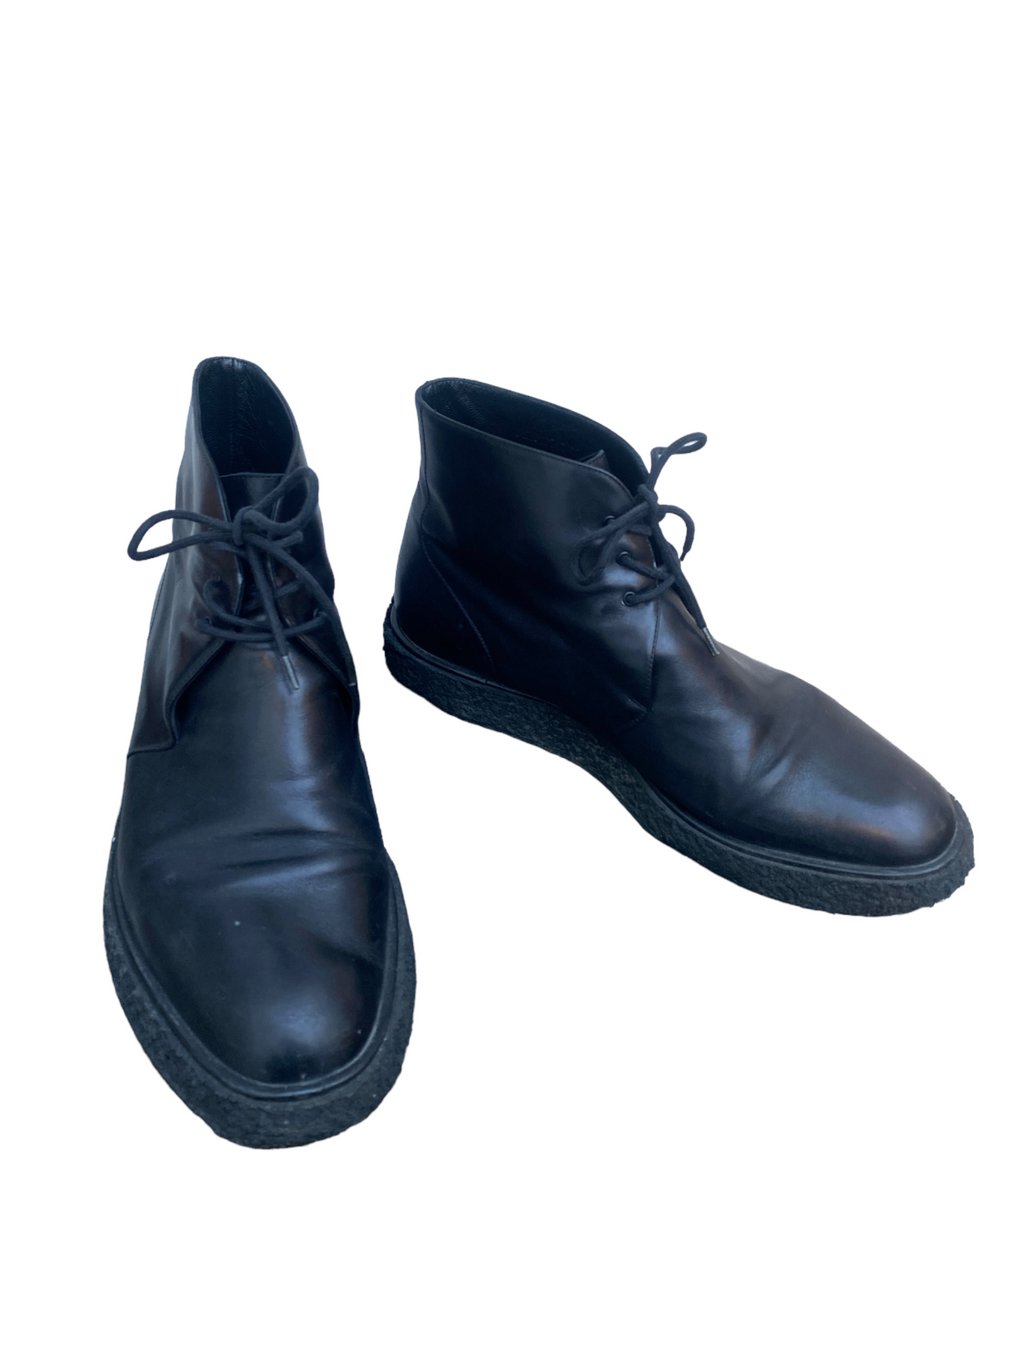 Black Leather Chukka Boots